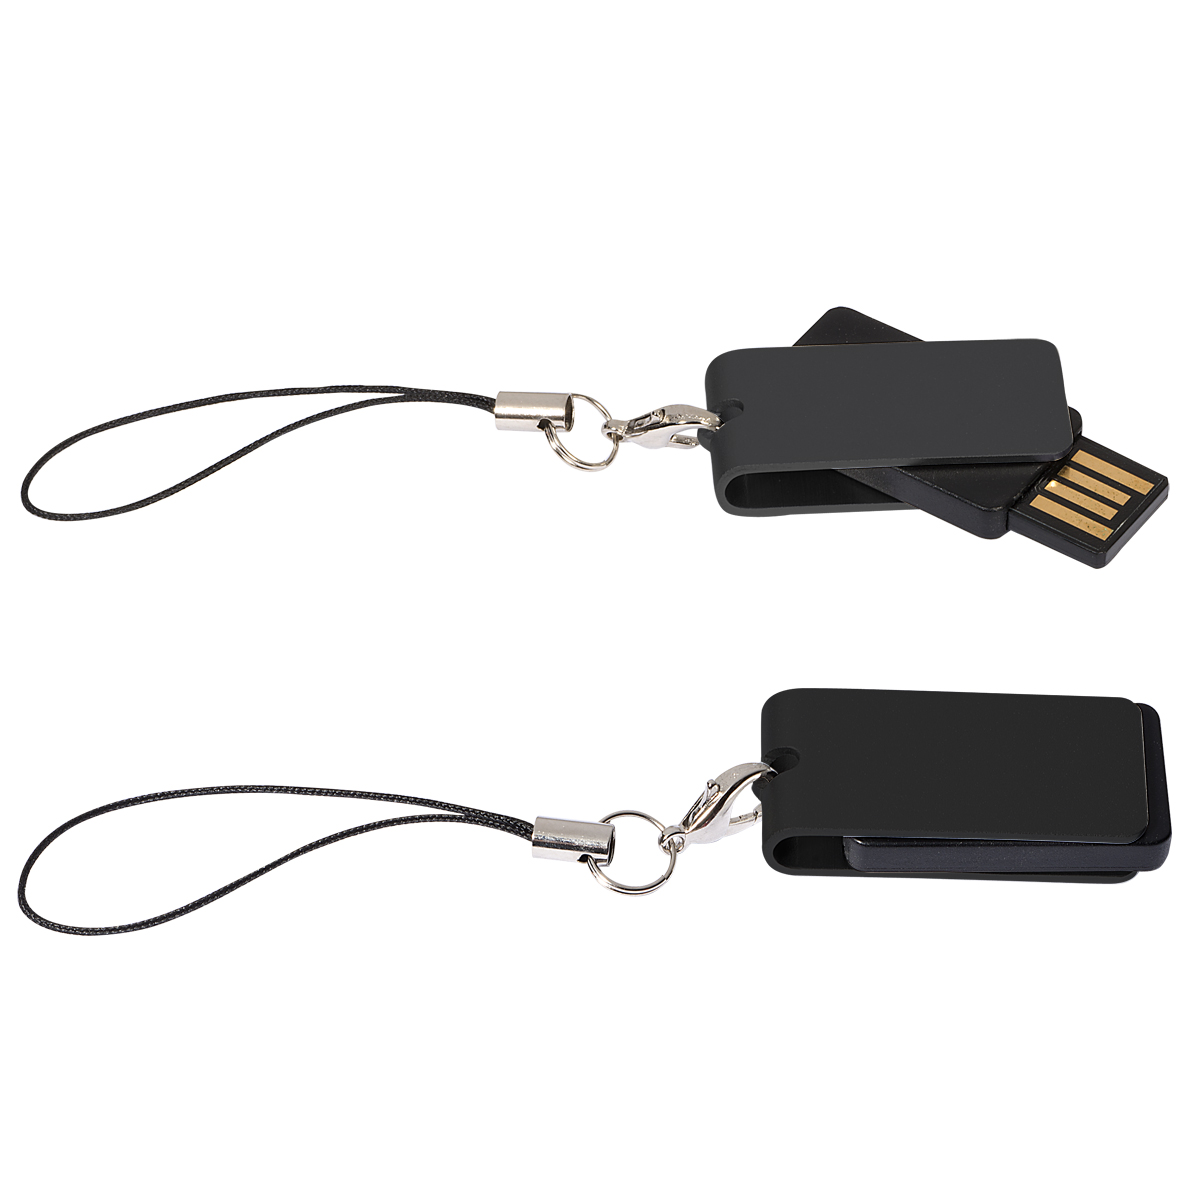 SlimFoldable USB Memory Flash Drive - 1GB